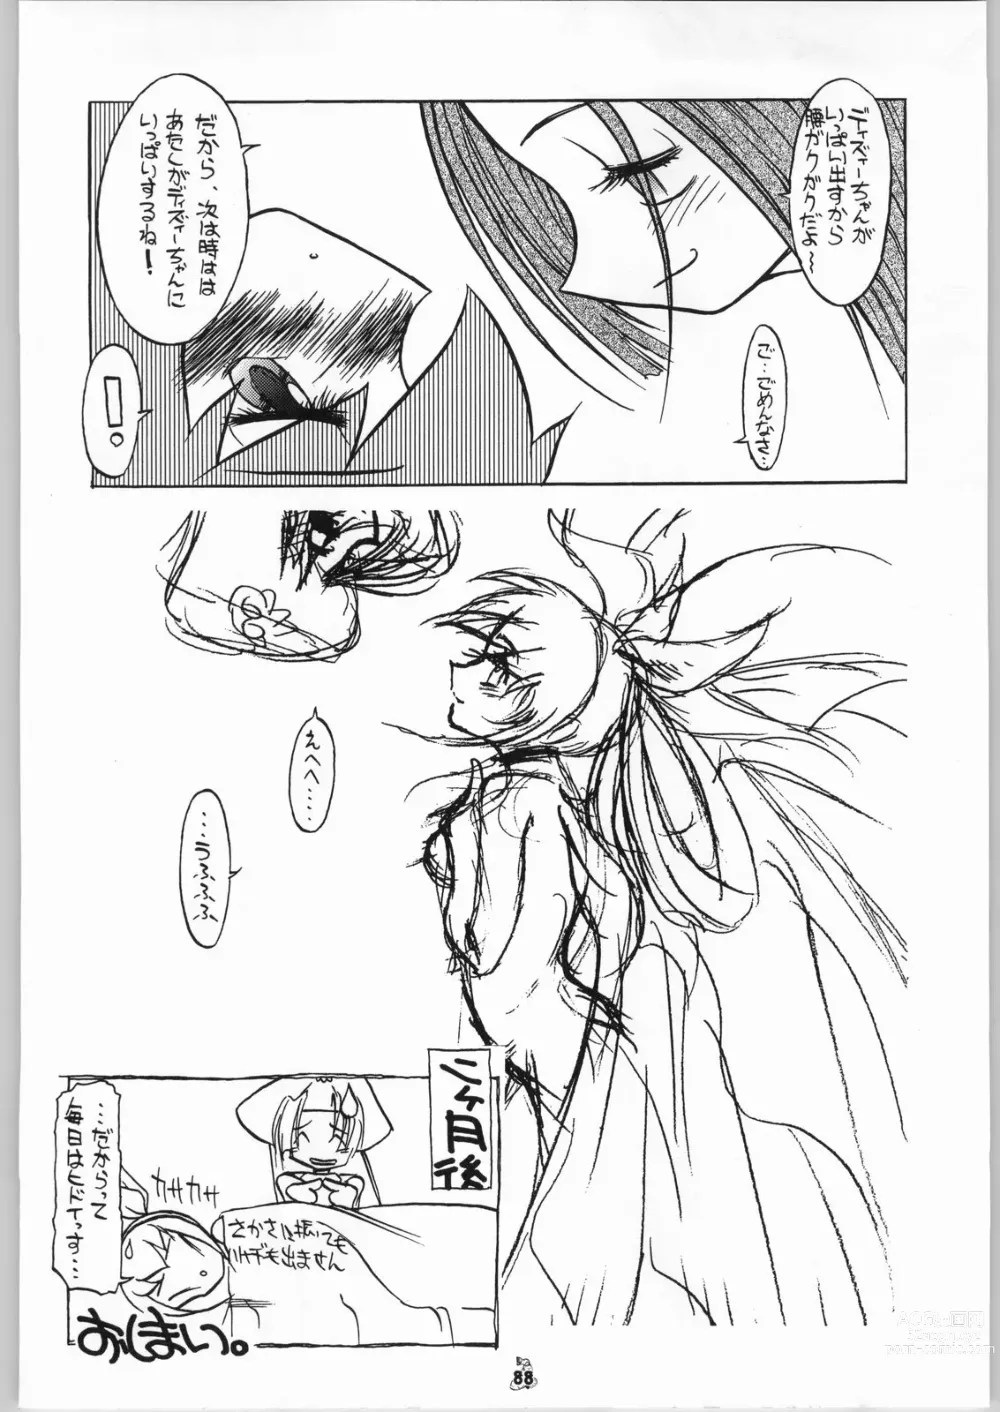 Page 87 of doujinshi Non.Dema-R Kesshou Hen